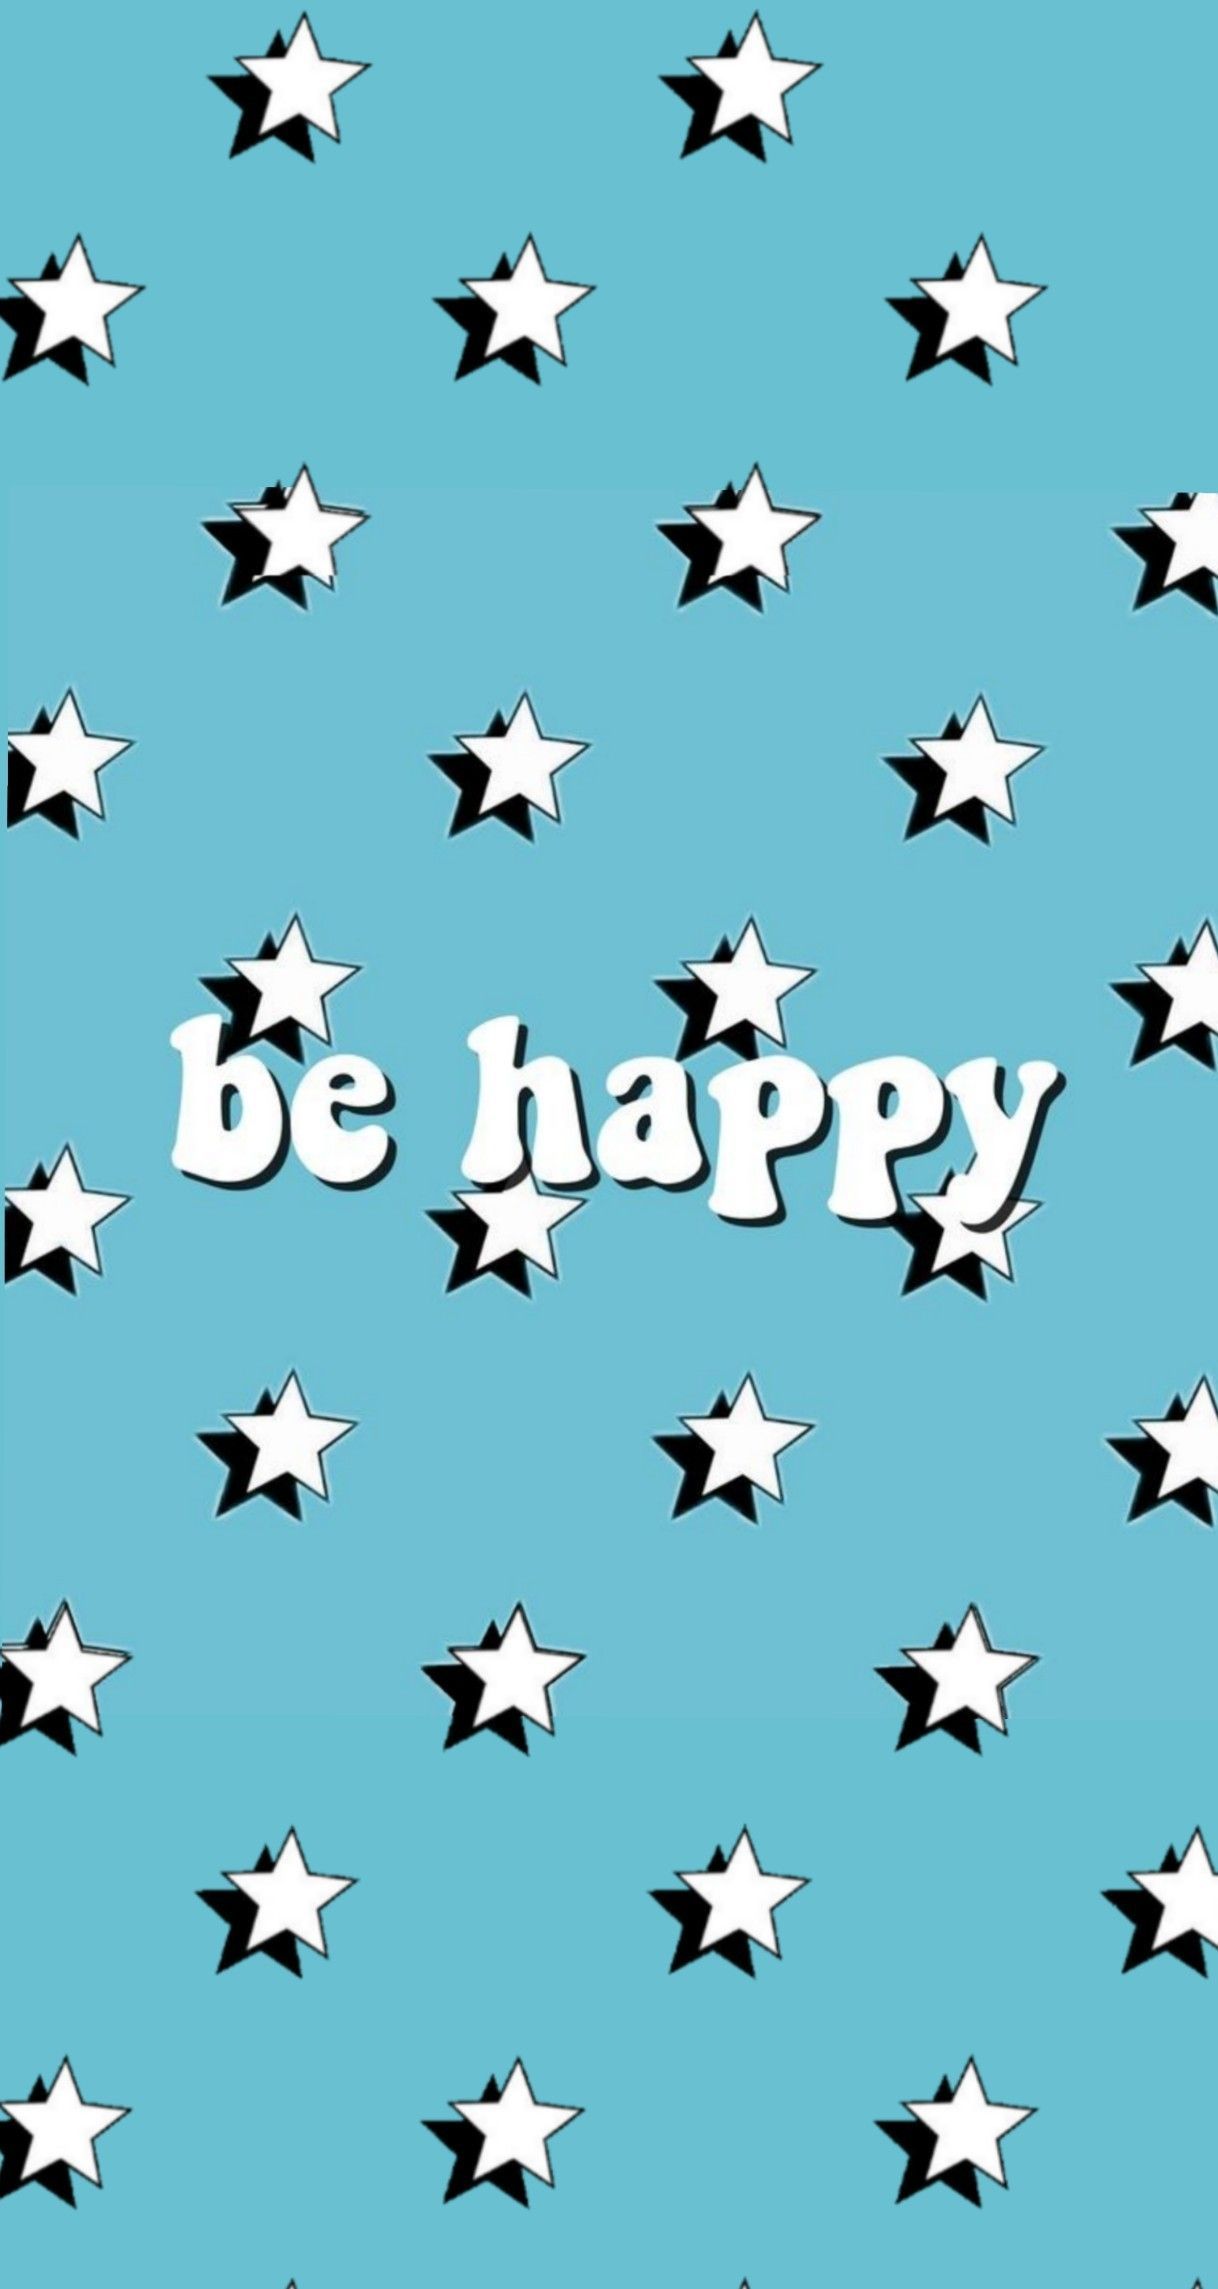 Be happy wallpaper - Happy